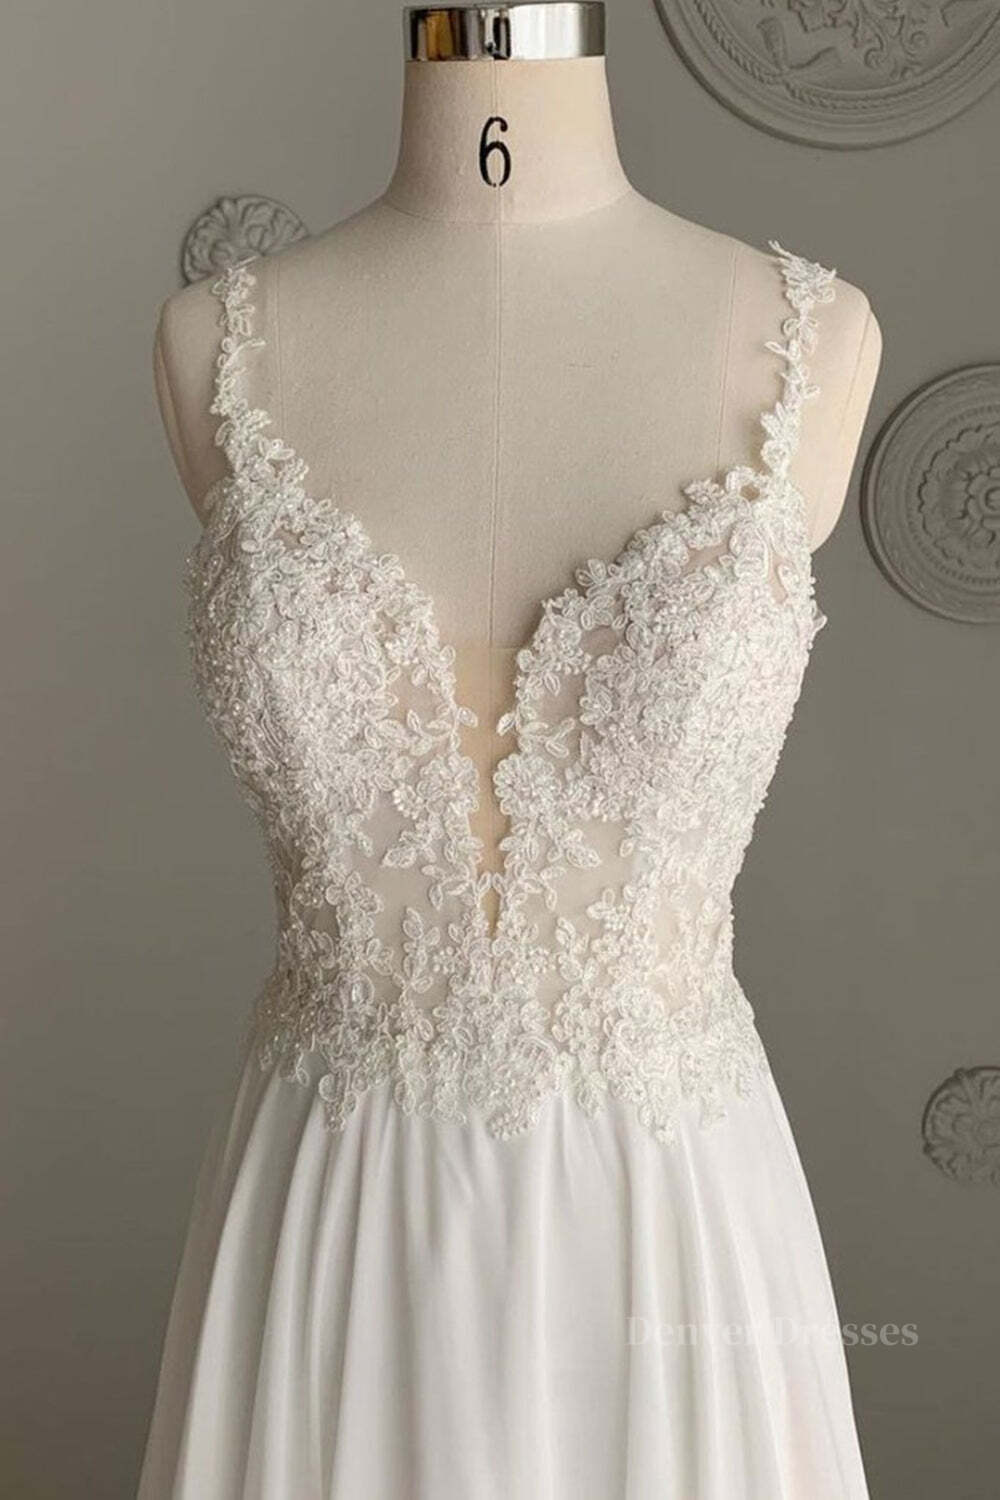 Formal Dress Inspo, Deep V Neck White Lace Long Prom Dress, Long White Formal Dress, White Lace Evening Dress, White Bridesmaid Dress